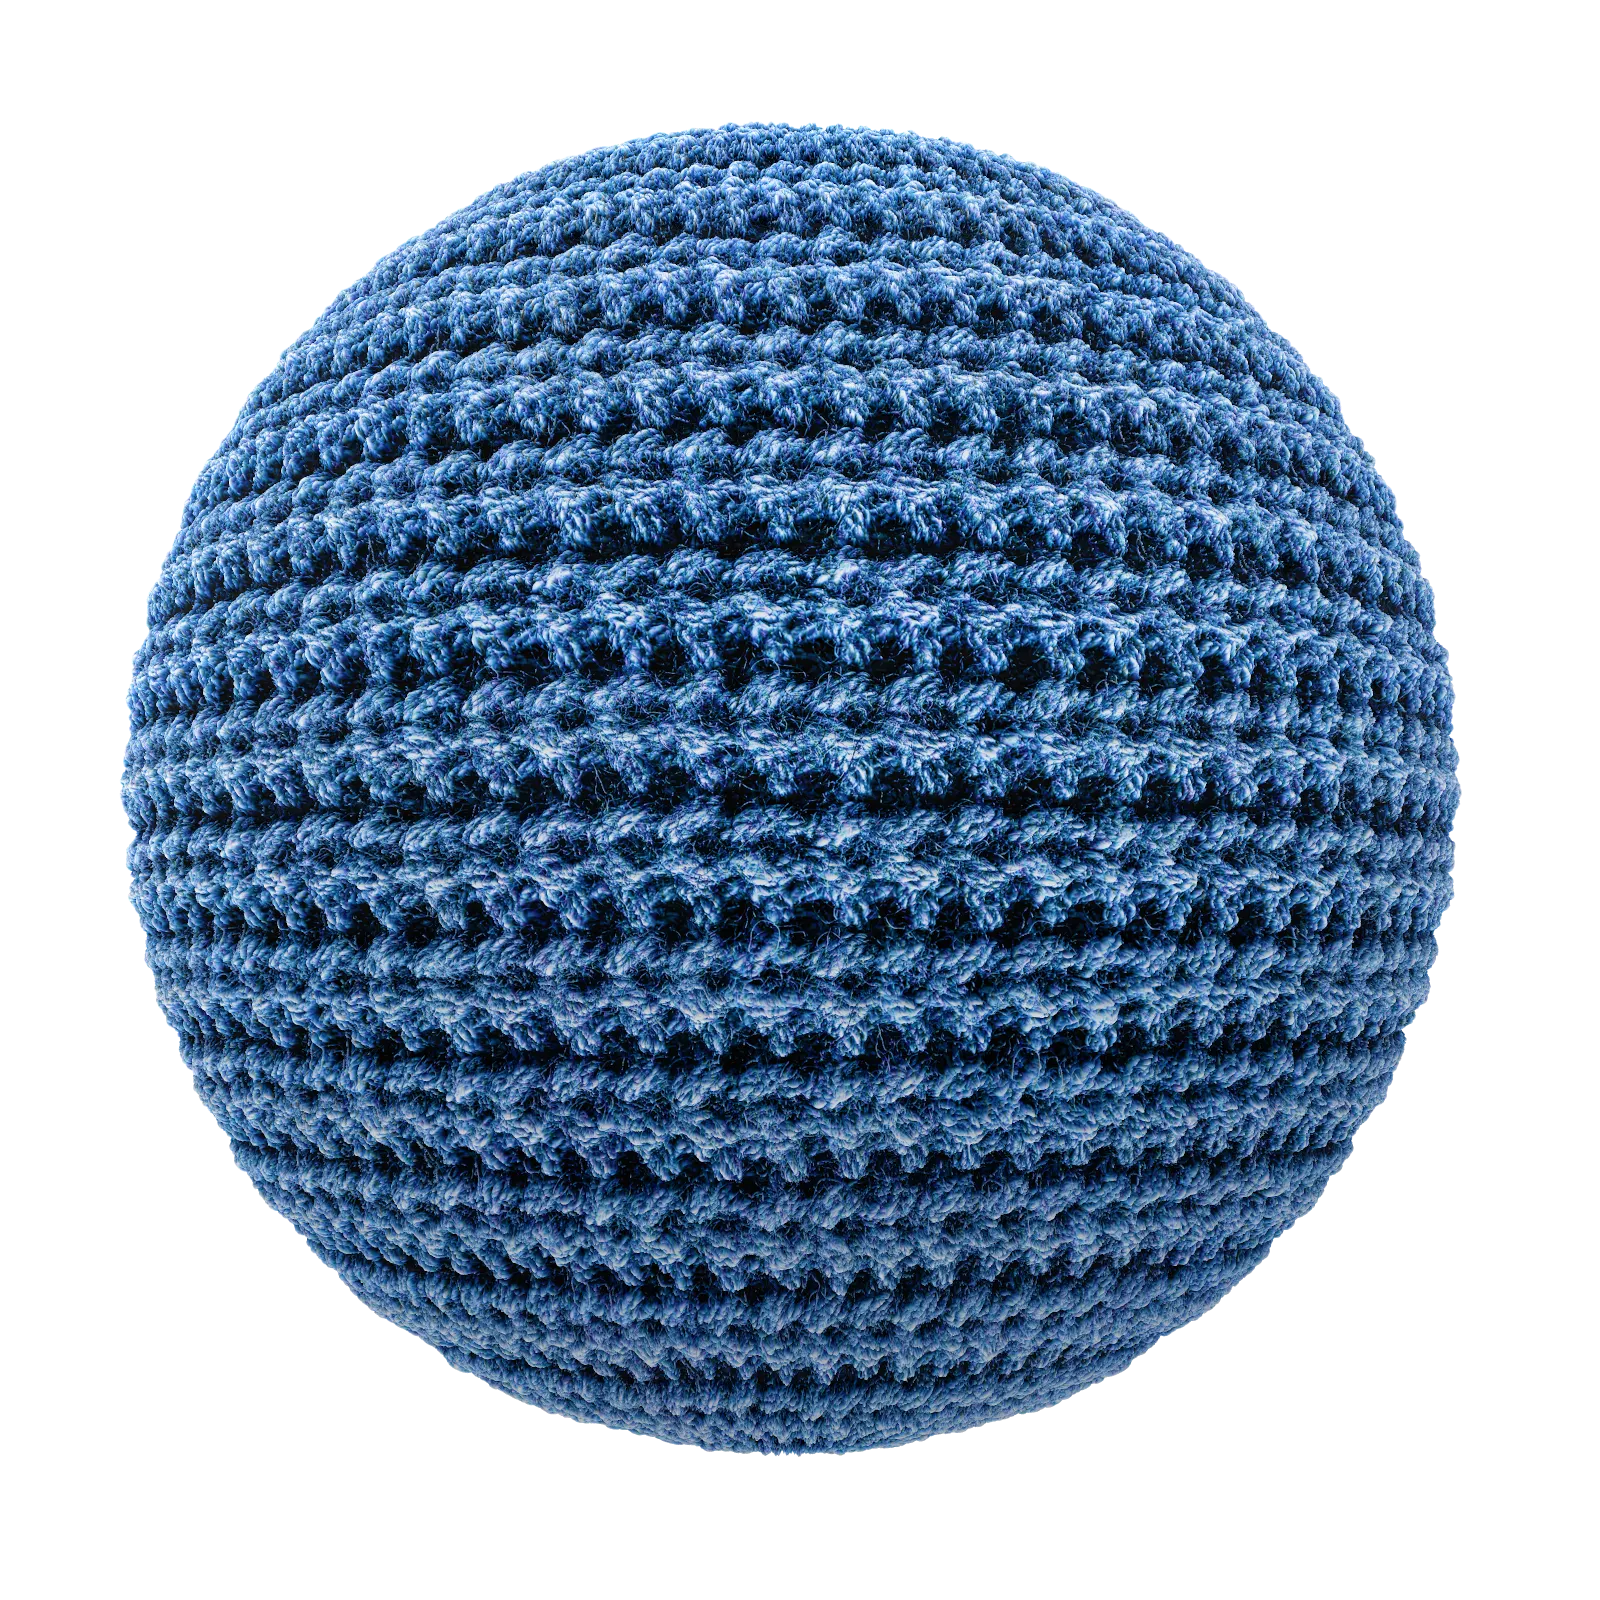 PBR CGAXIS TEXTURES – FABRICS – Blue Wool Fabric 01